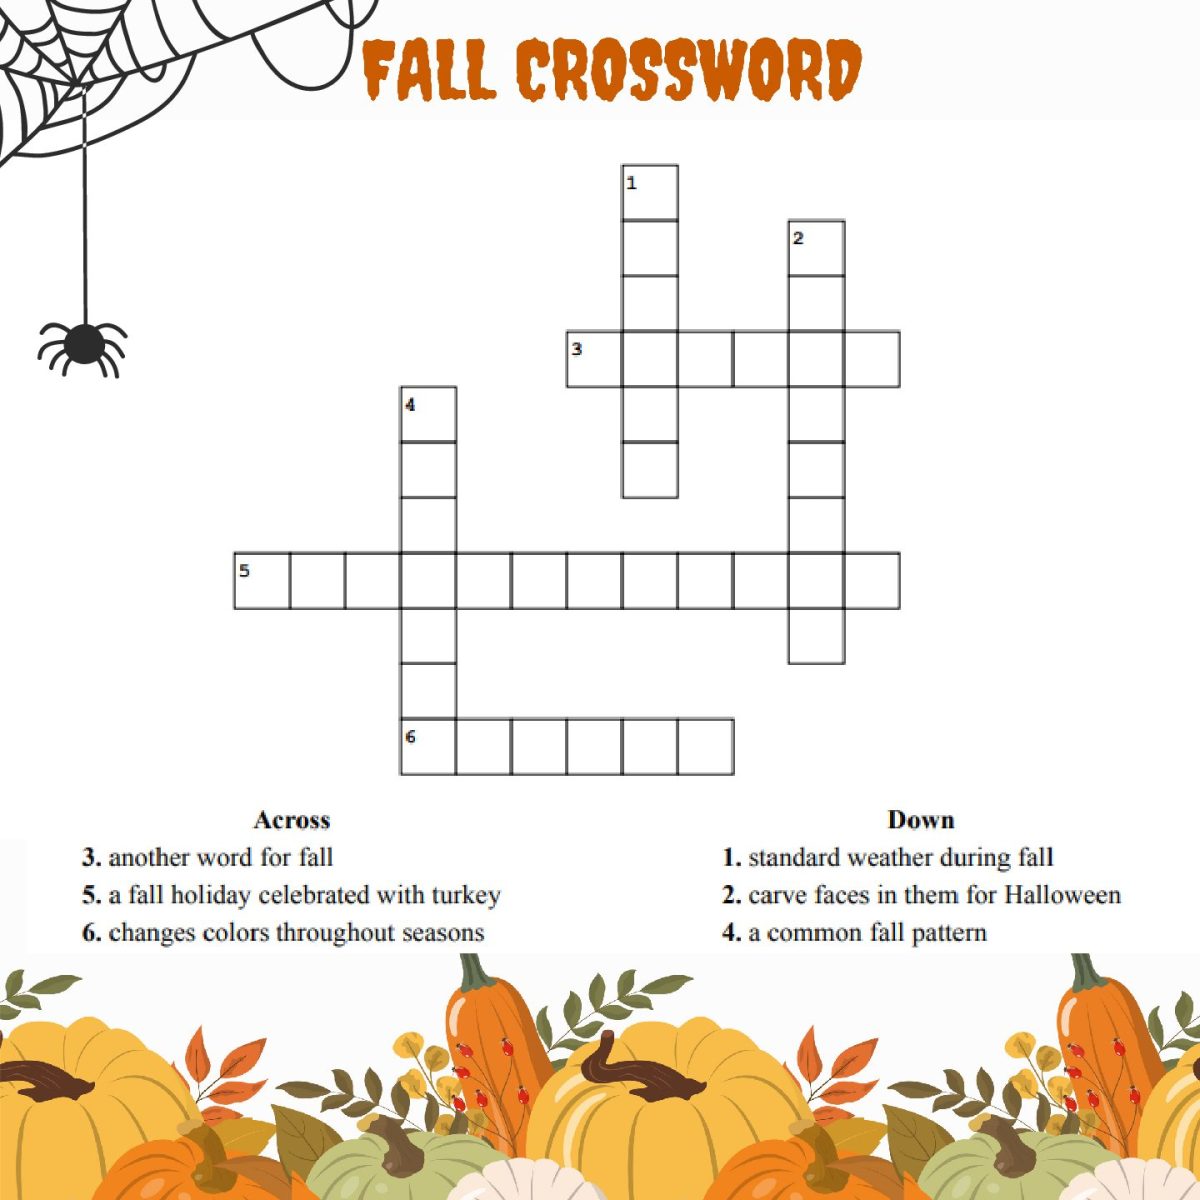 Fall crossword